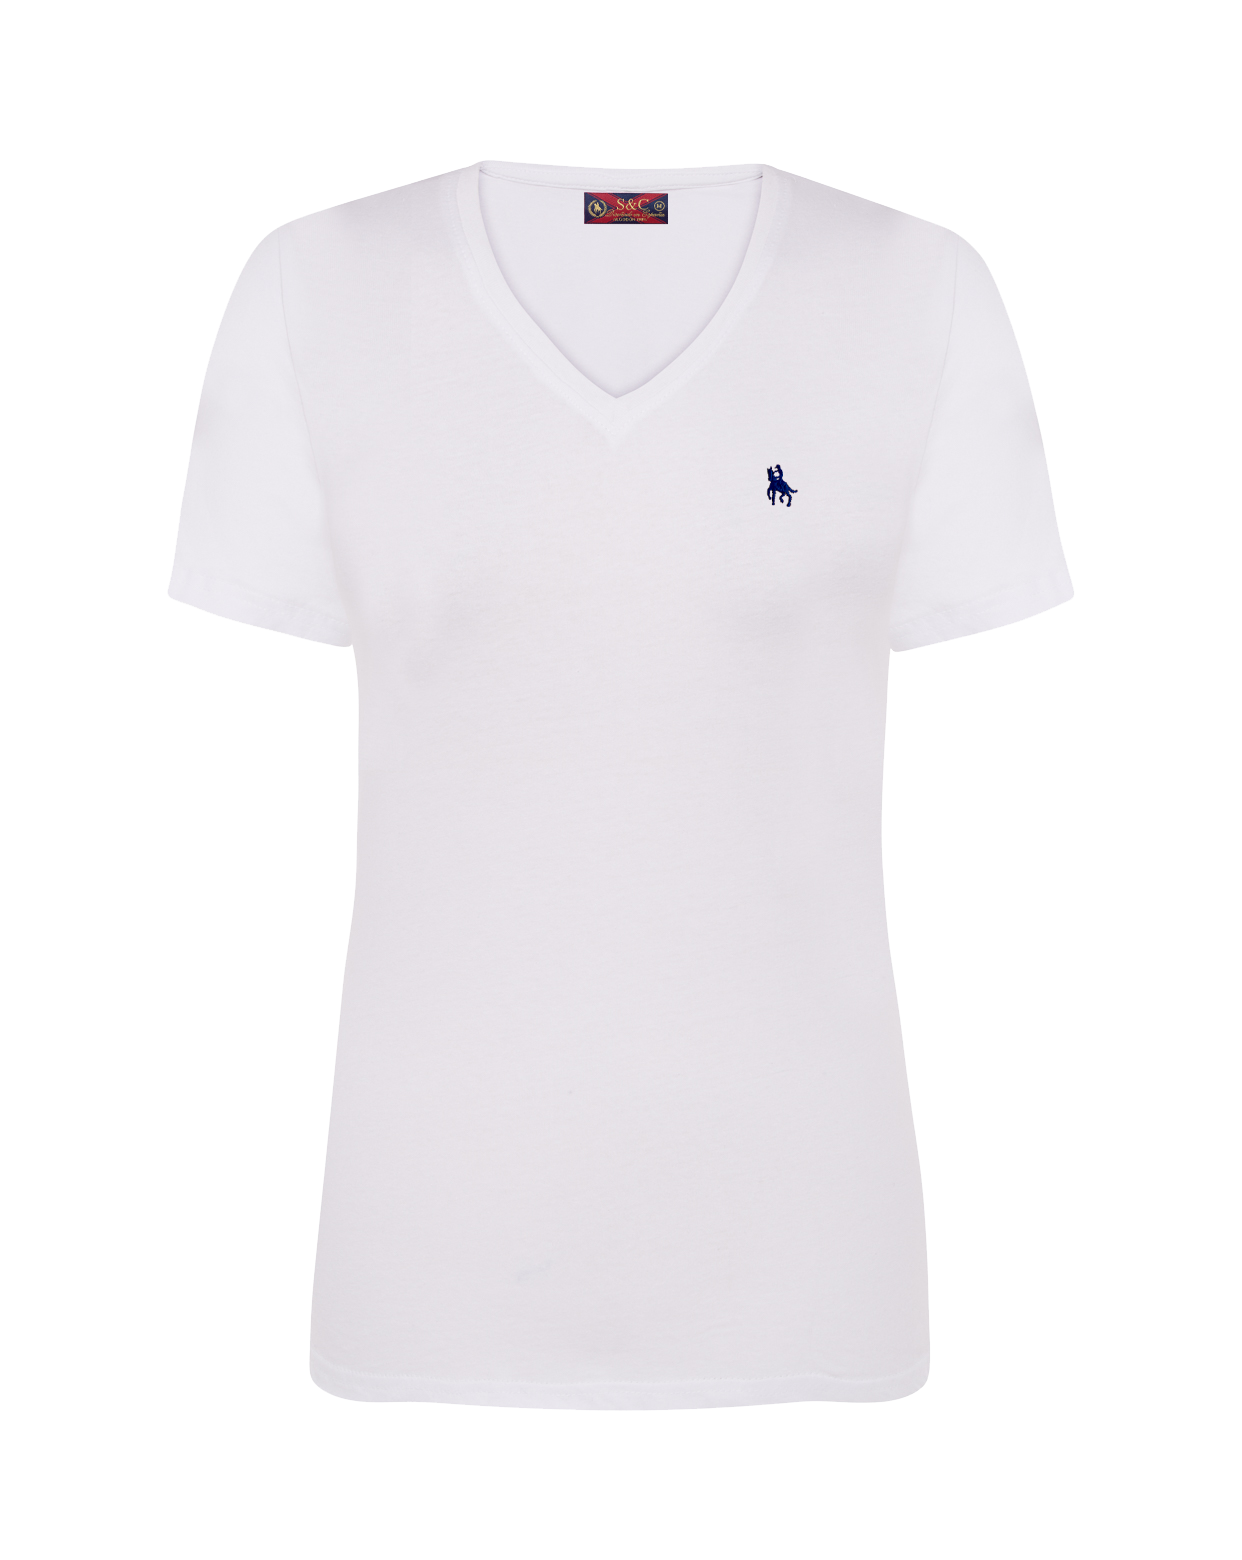 Camiseta pico manga corta blanca